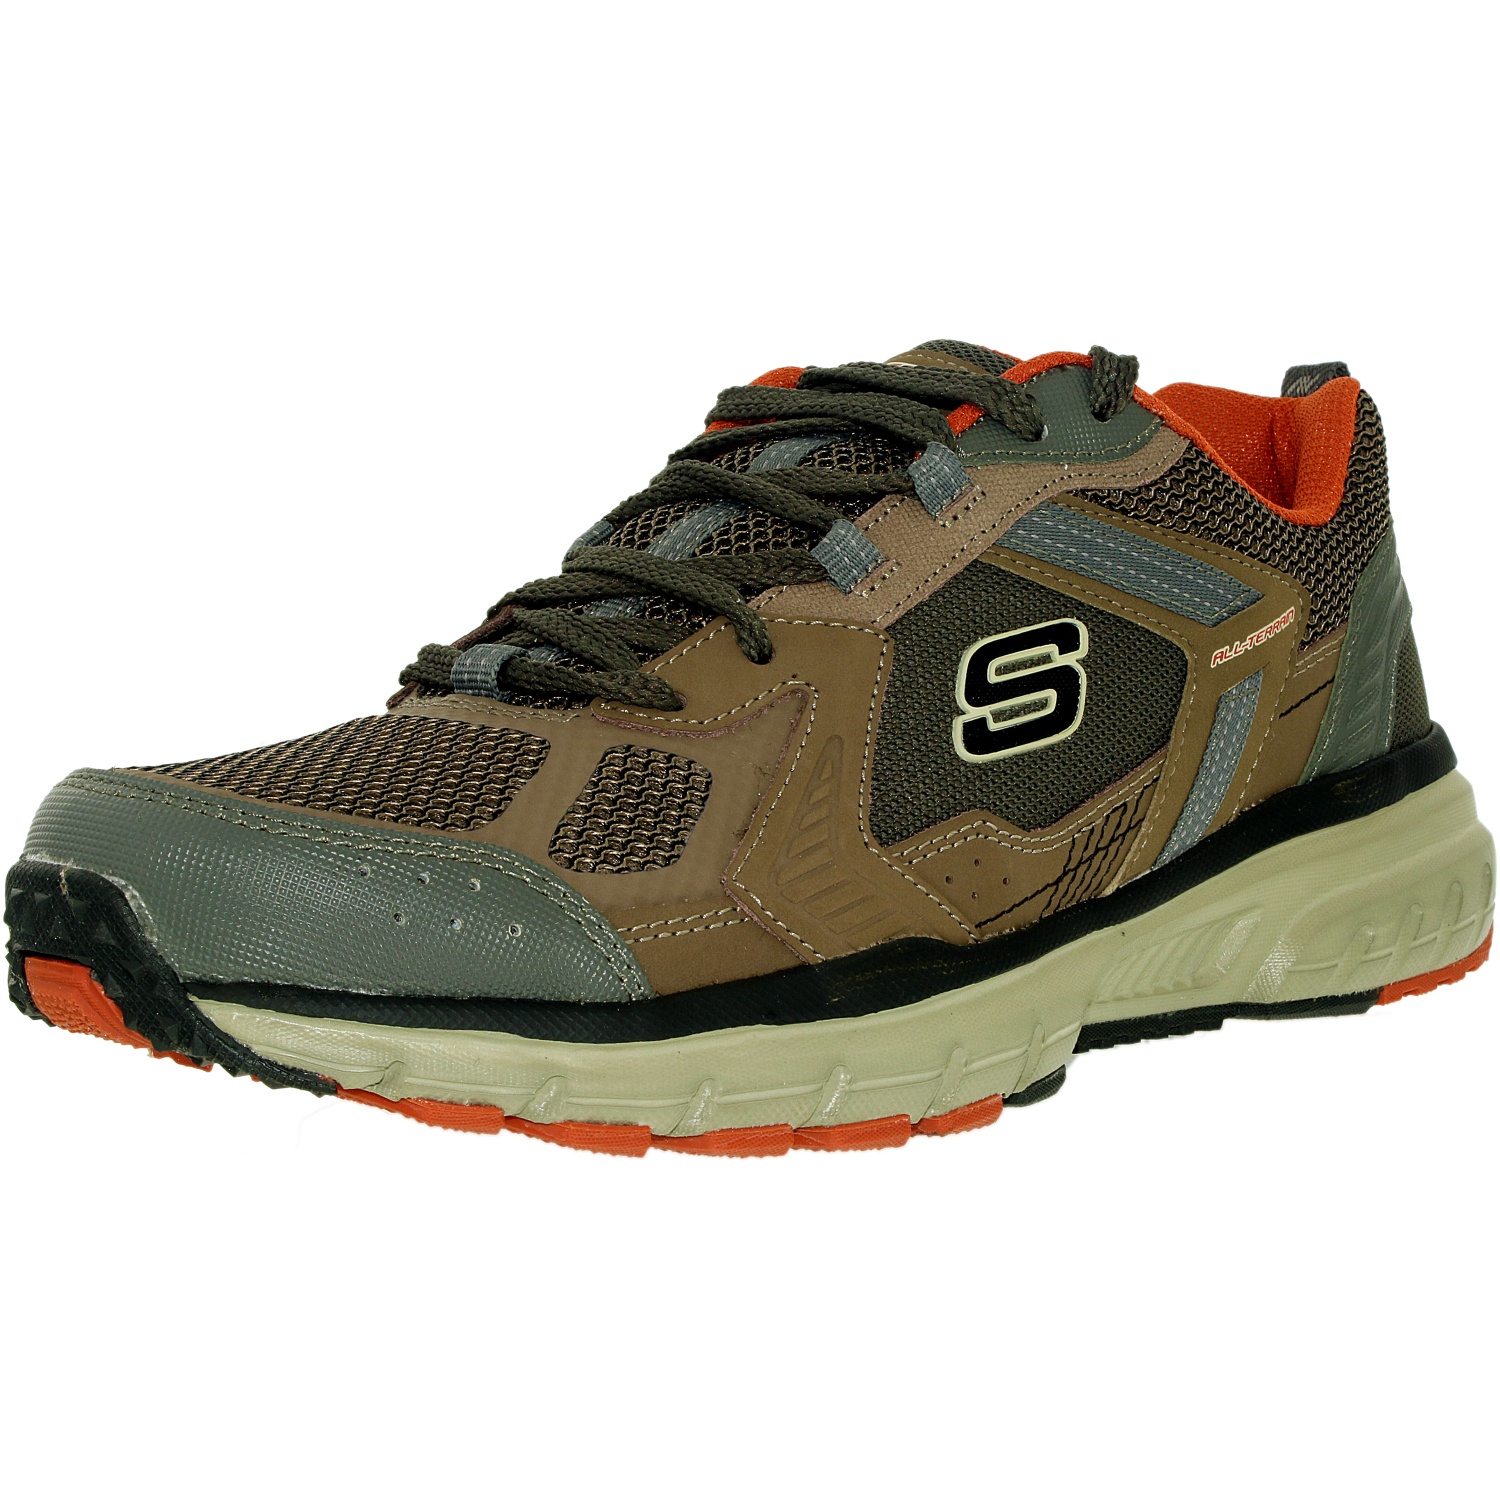 Color:Brown/Orange:Skechers Men's Geo Trek Pro Force Ankle-High Tennis Shoe